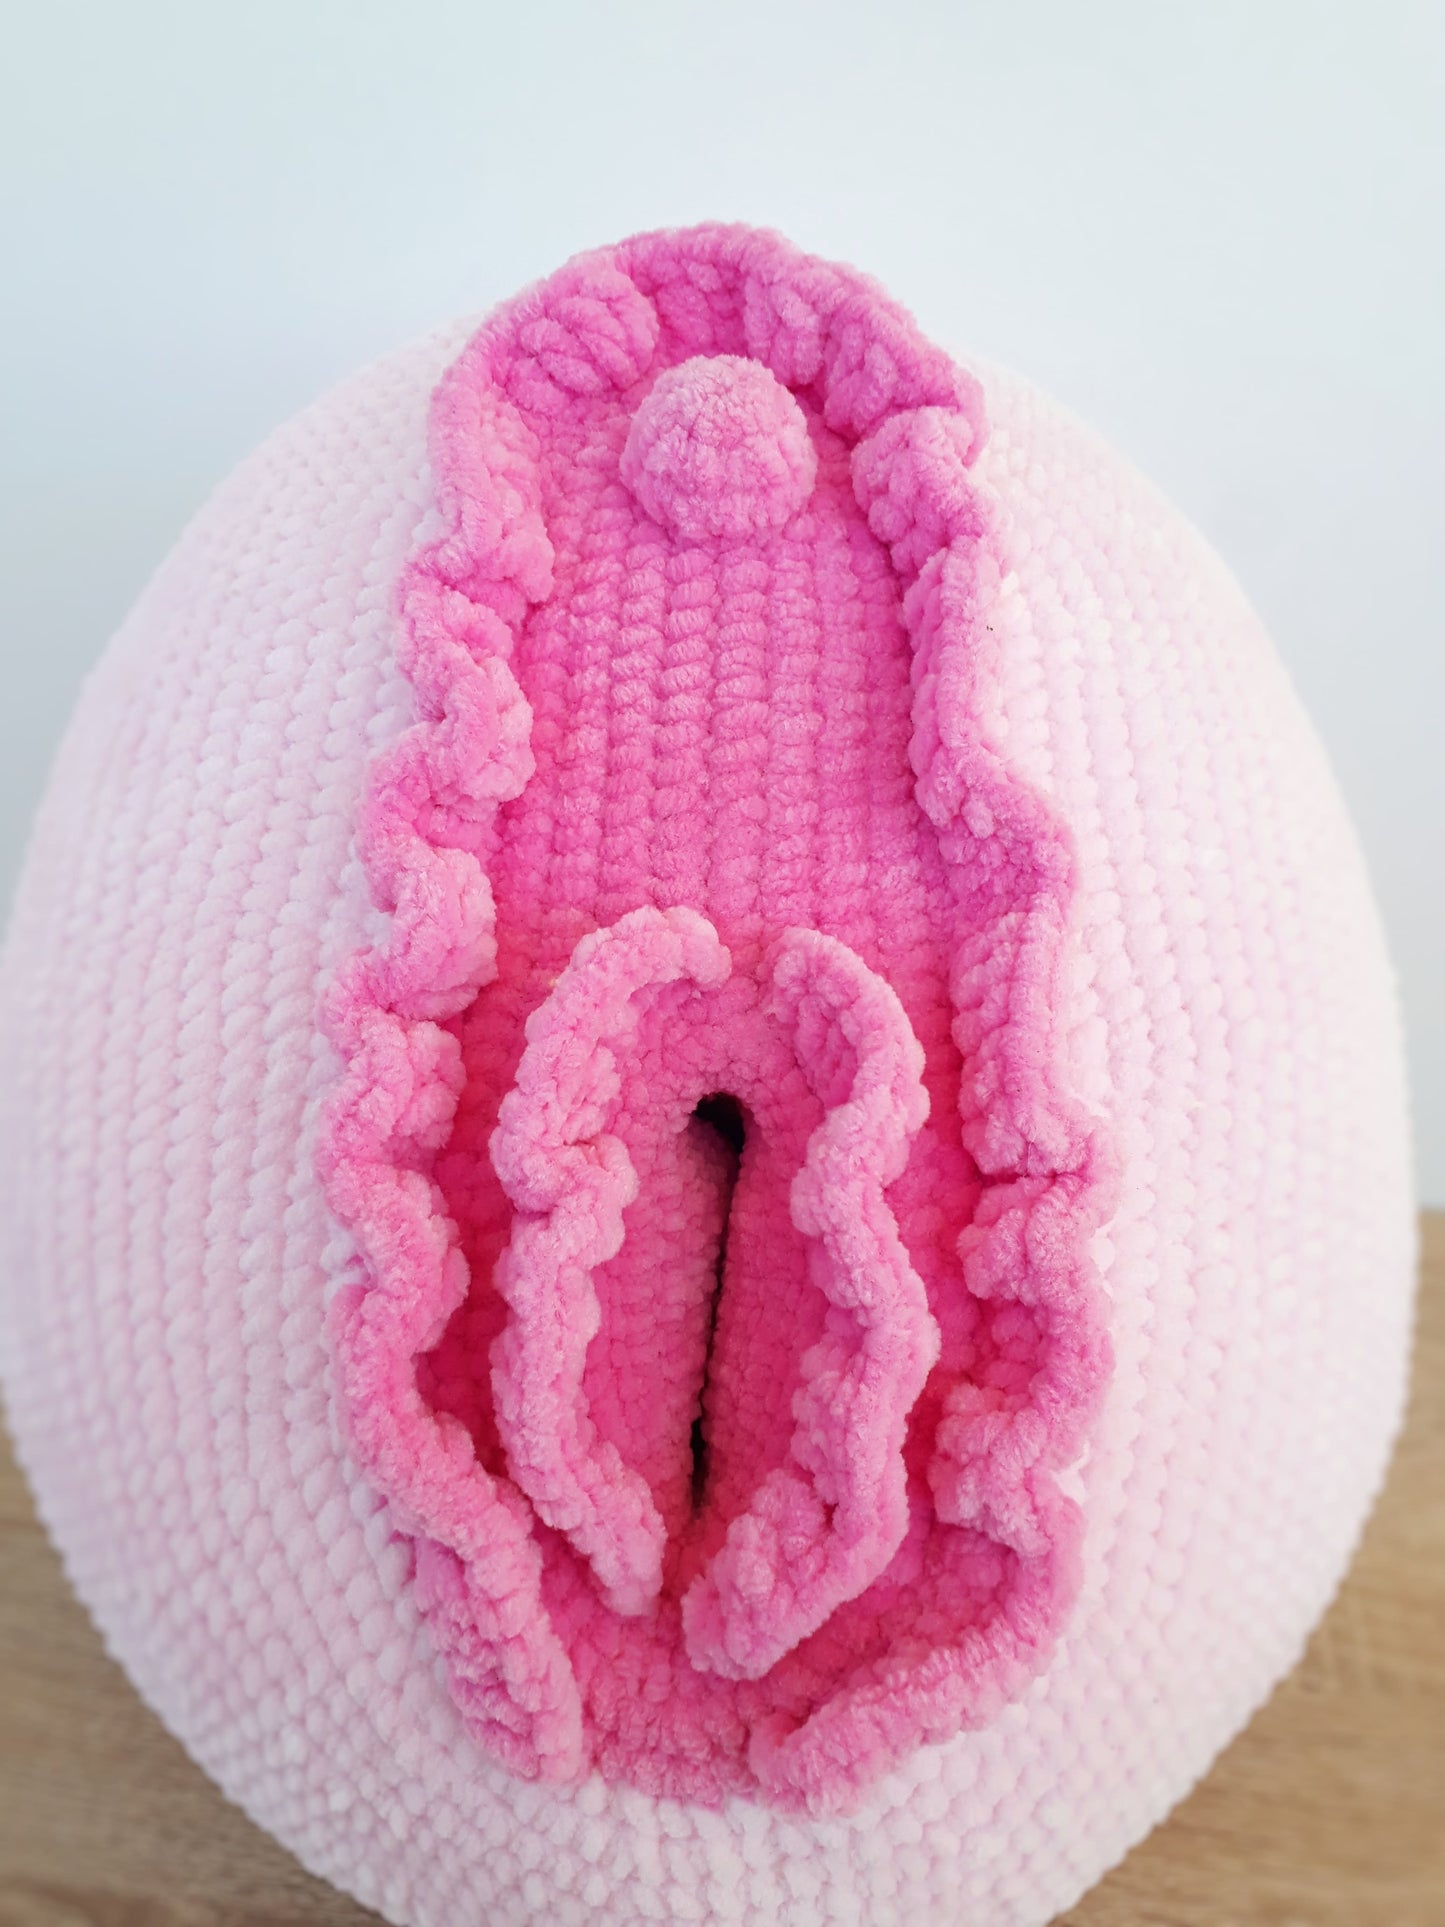 Crochet vulva pillow pattern, vagina pattern, Amigurumi pattern for beginner, Crochet boobs Pdf photo tutorial, gift for her, penis pillow